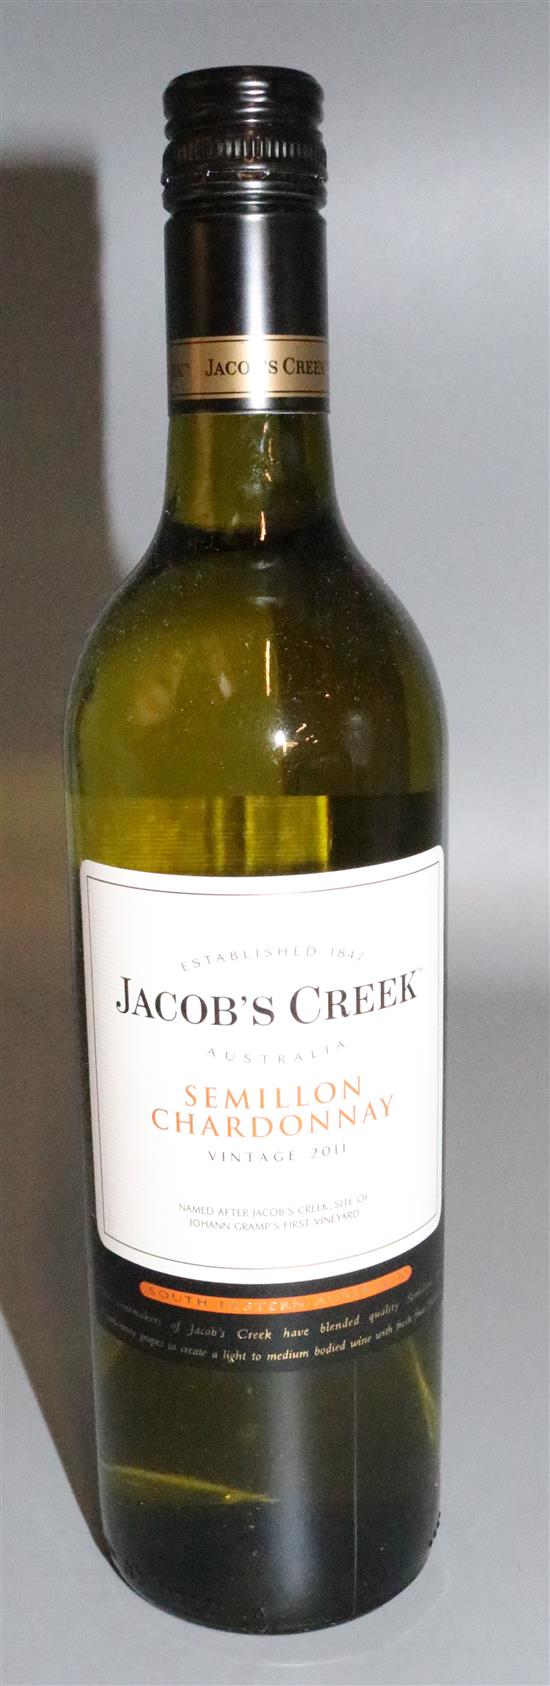 12x Semillon Chardonnay, 2010